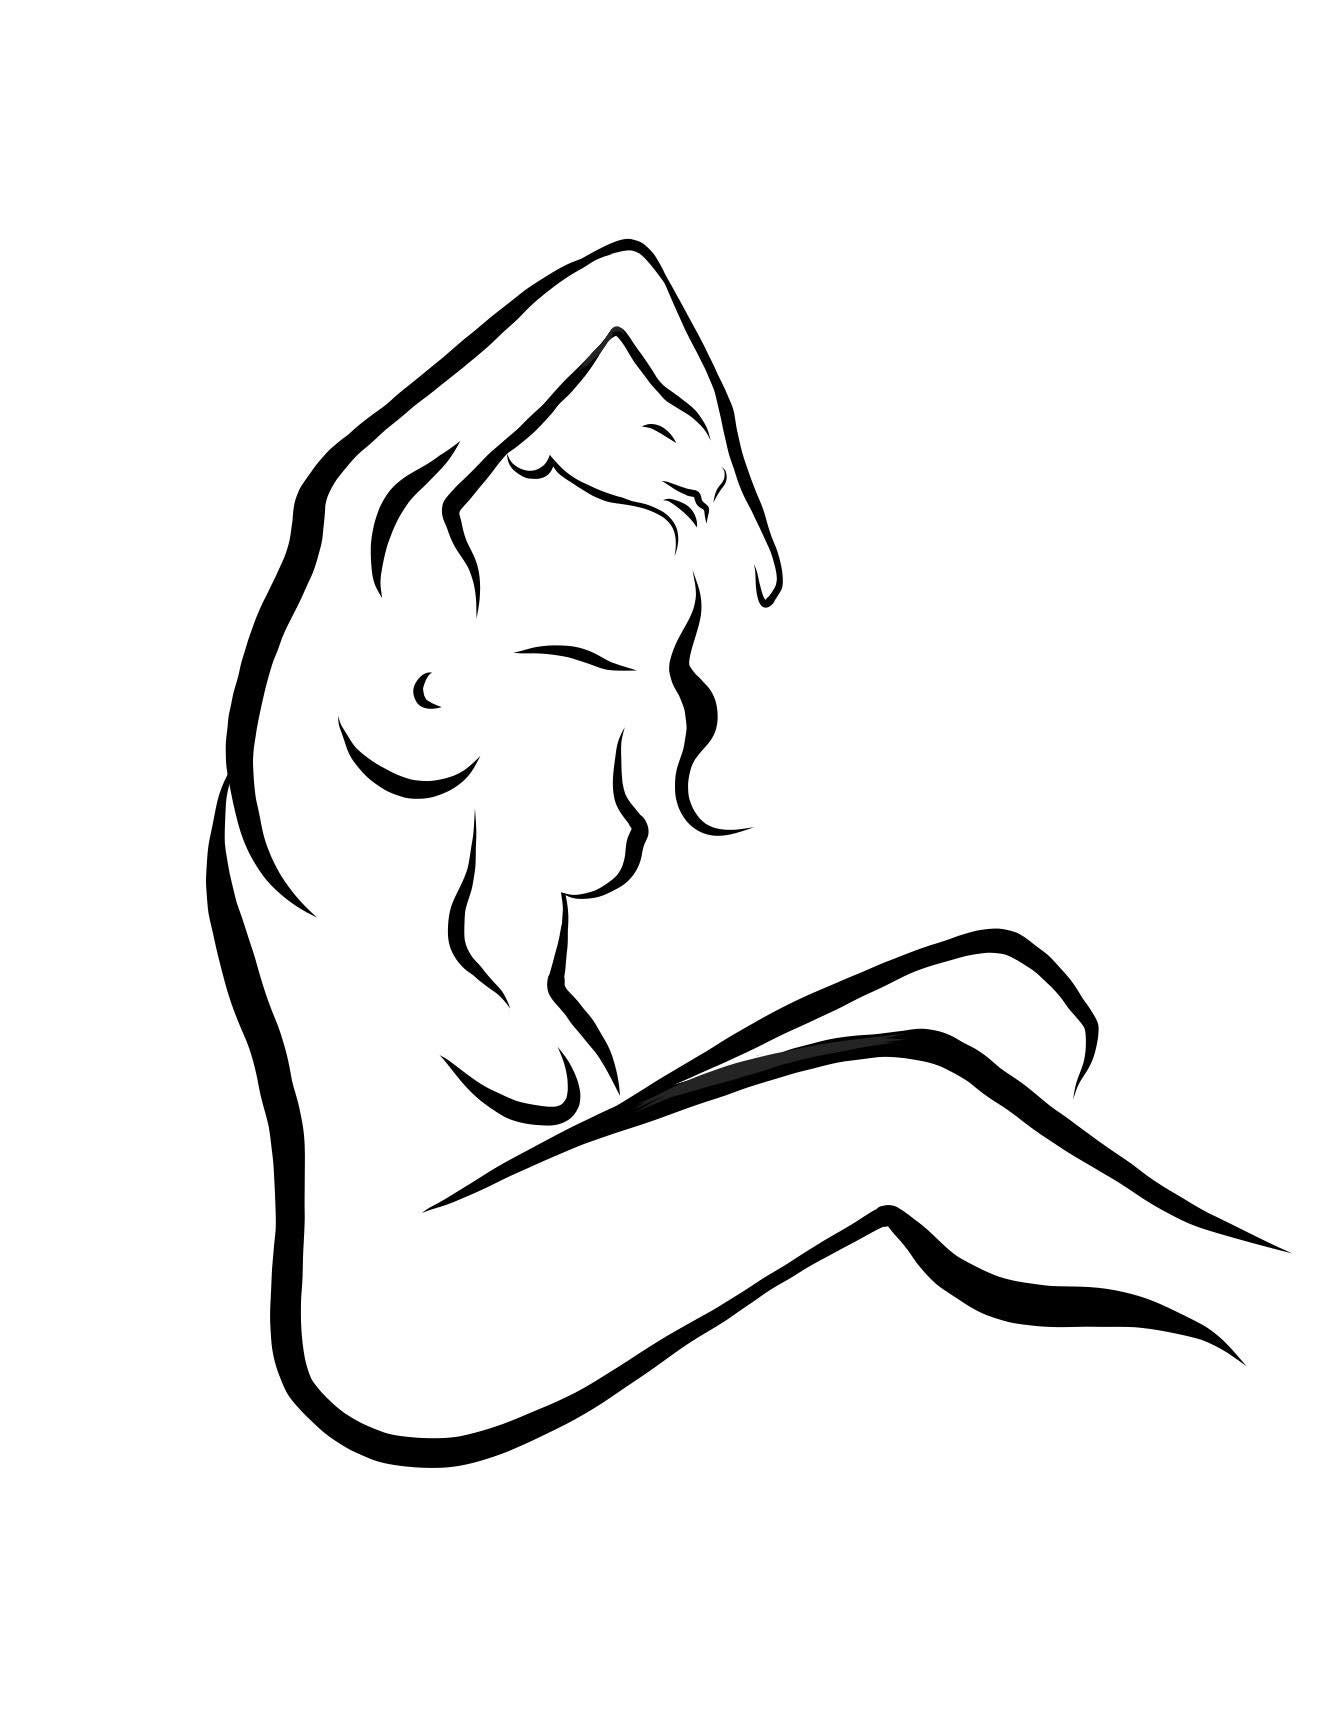 Haiku #18, 1/50 - Digital Vector Drawing Seated Female Nude Woman Figure Arm Up